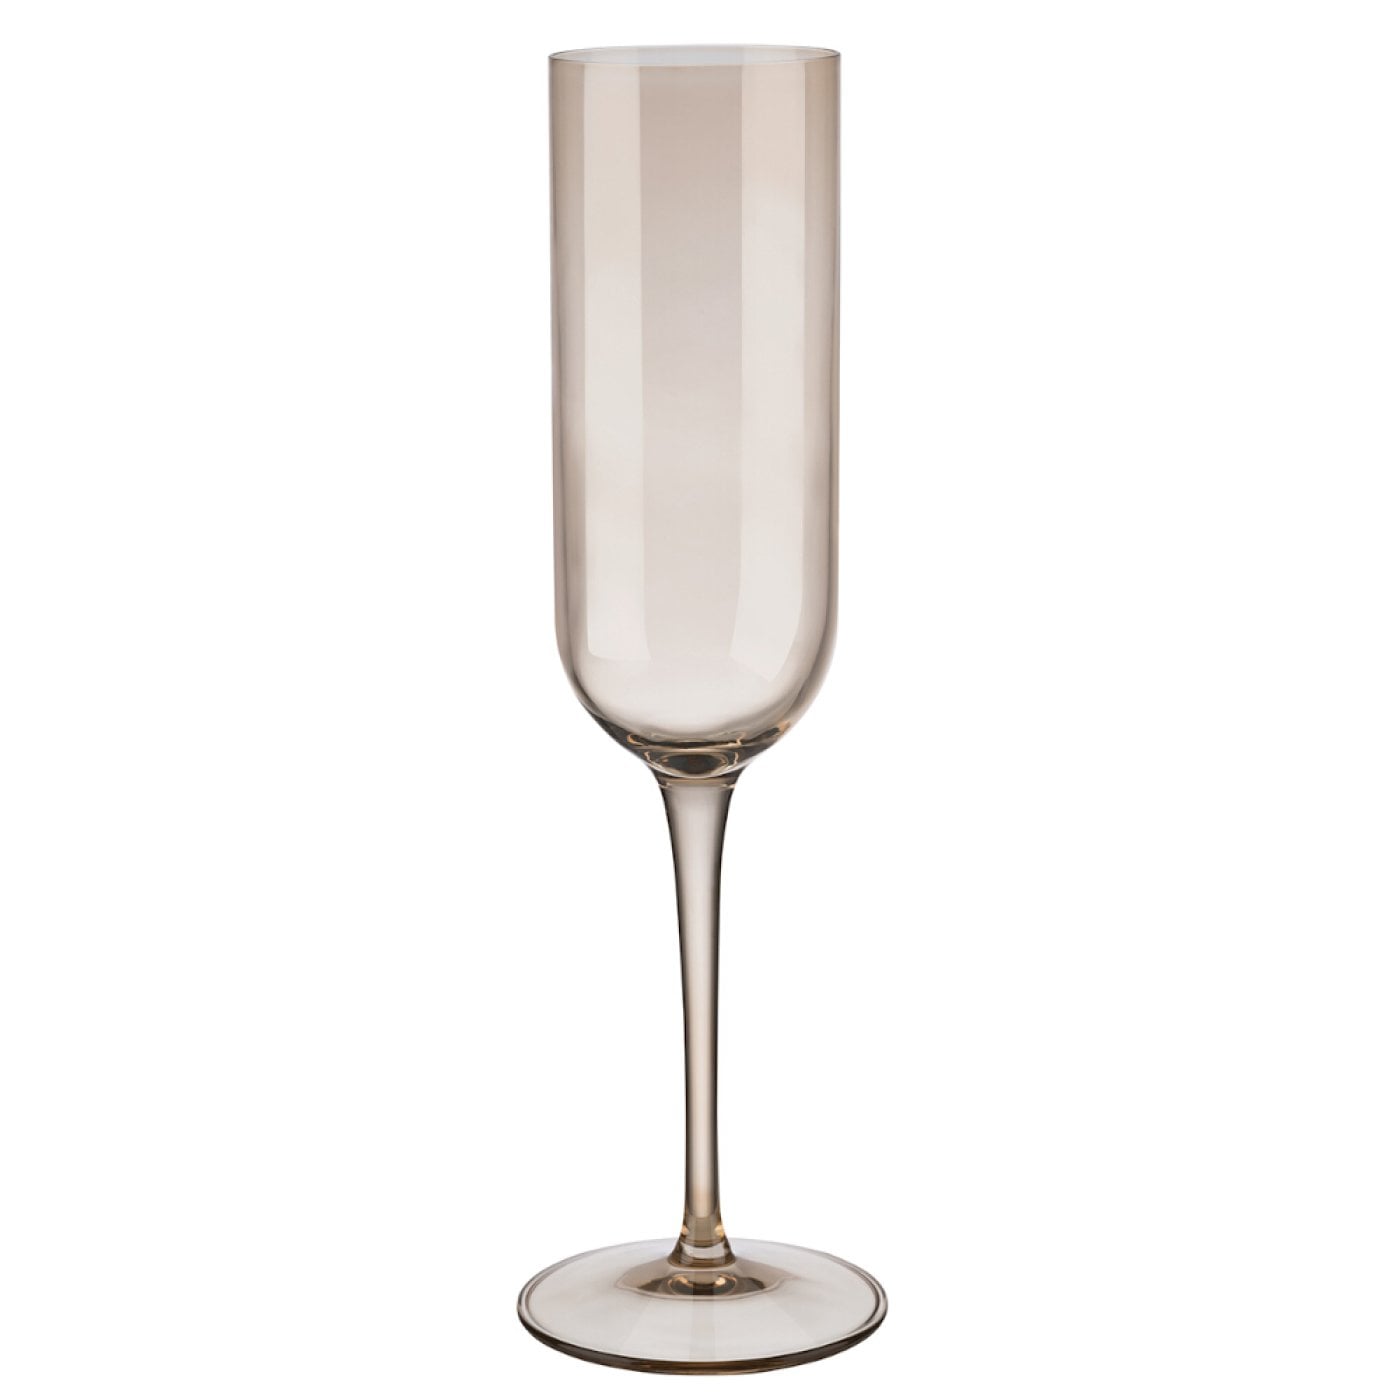 Blomus Champagne Flute Glasses Tinted in Golden-Beige Nomad Fuum Set of 4